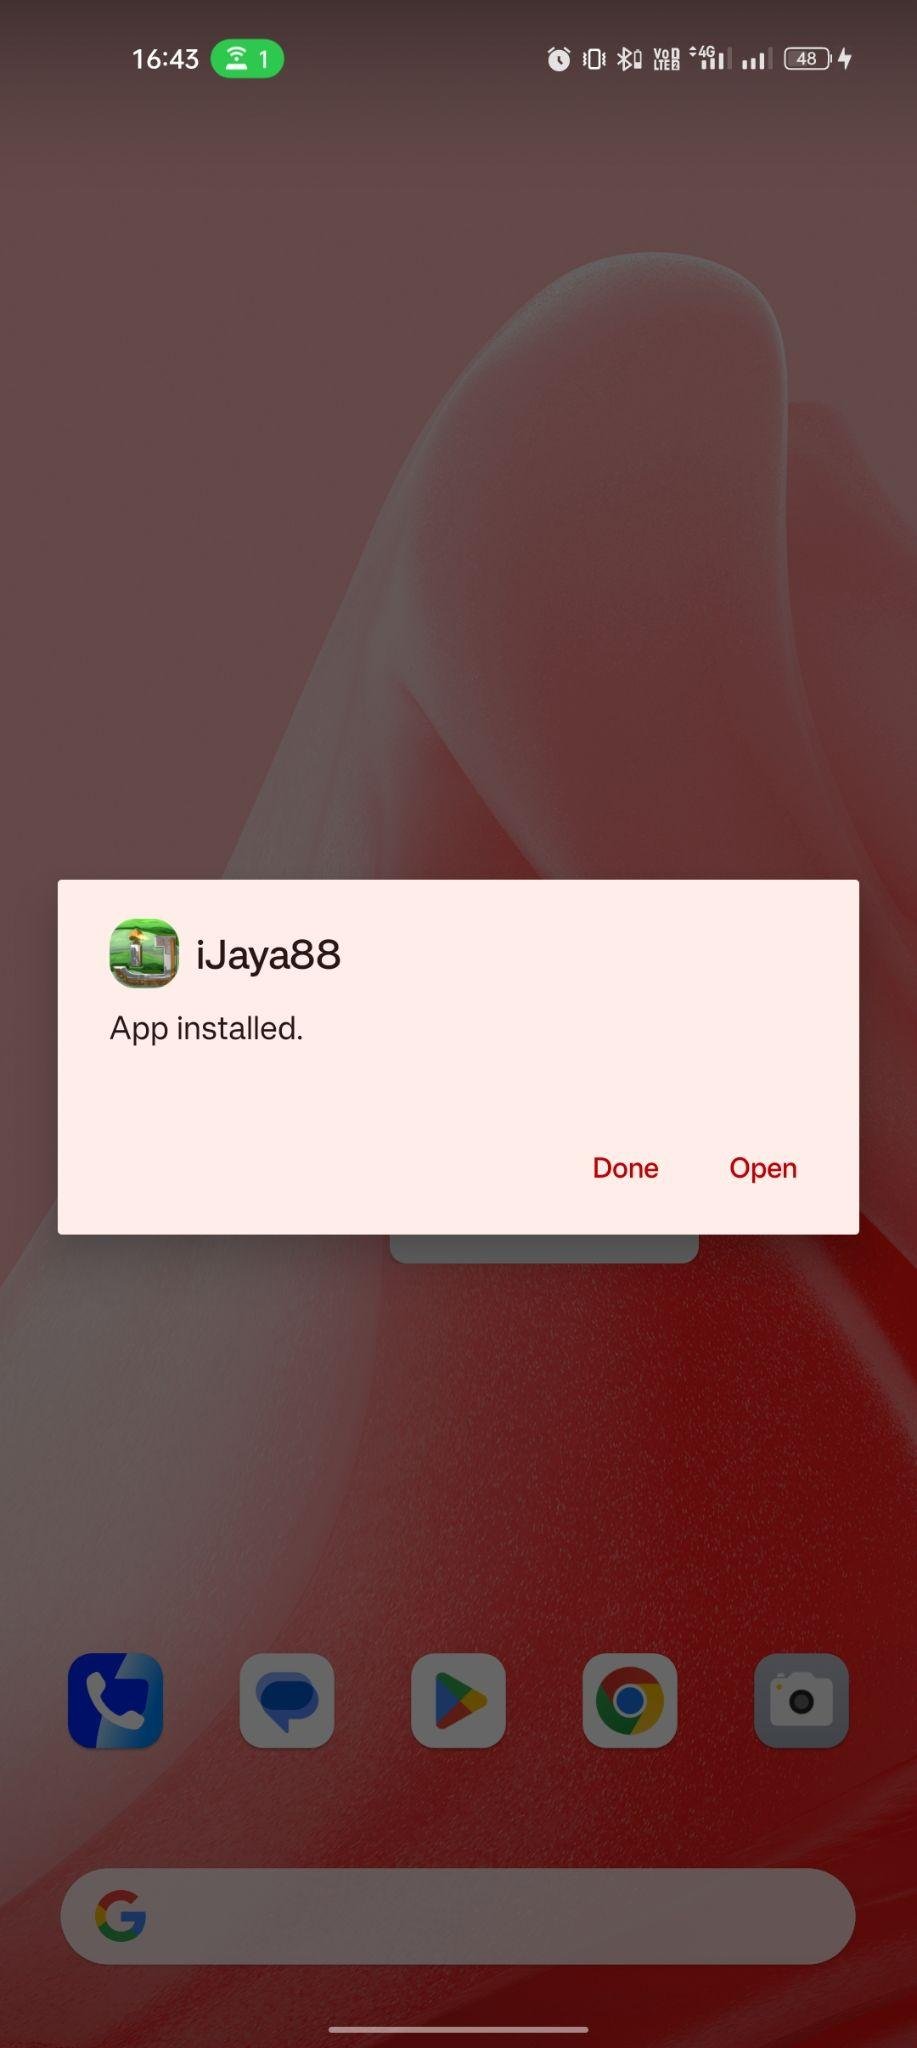 iJaya88 apk installed